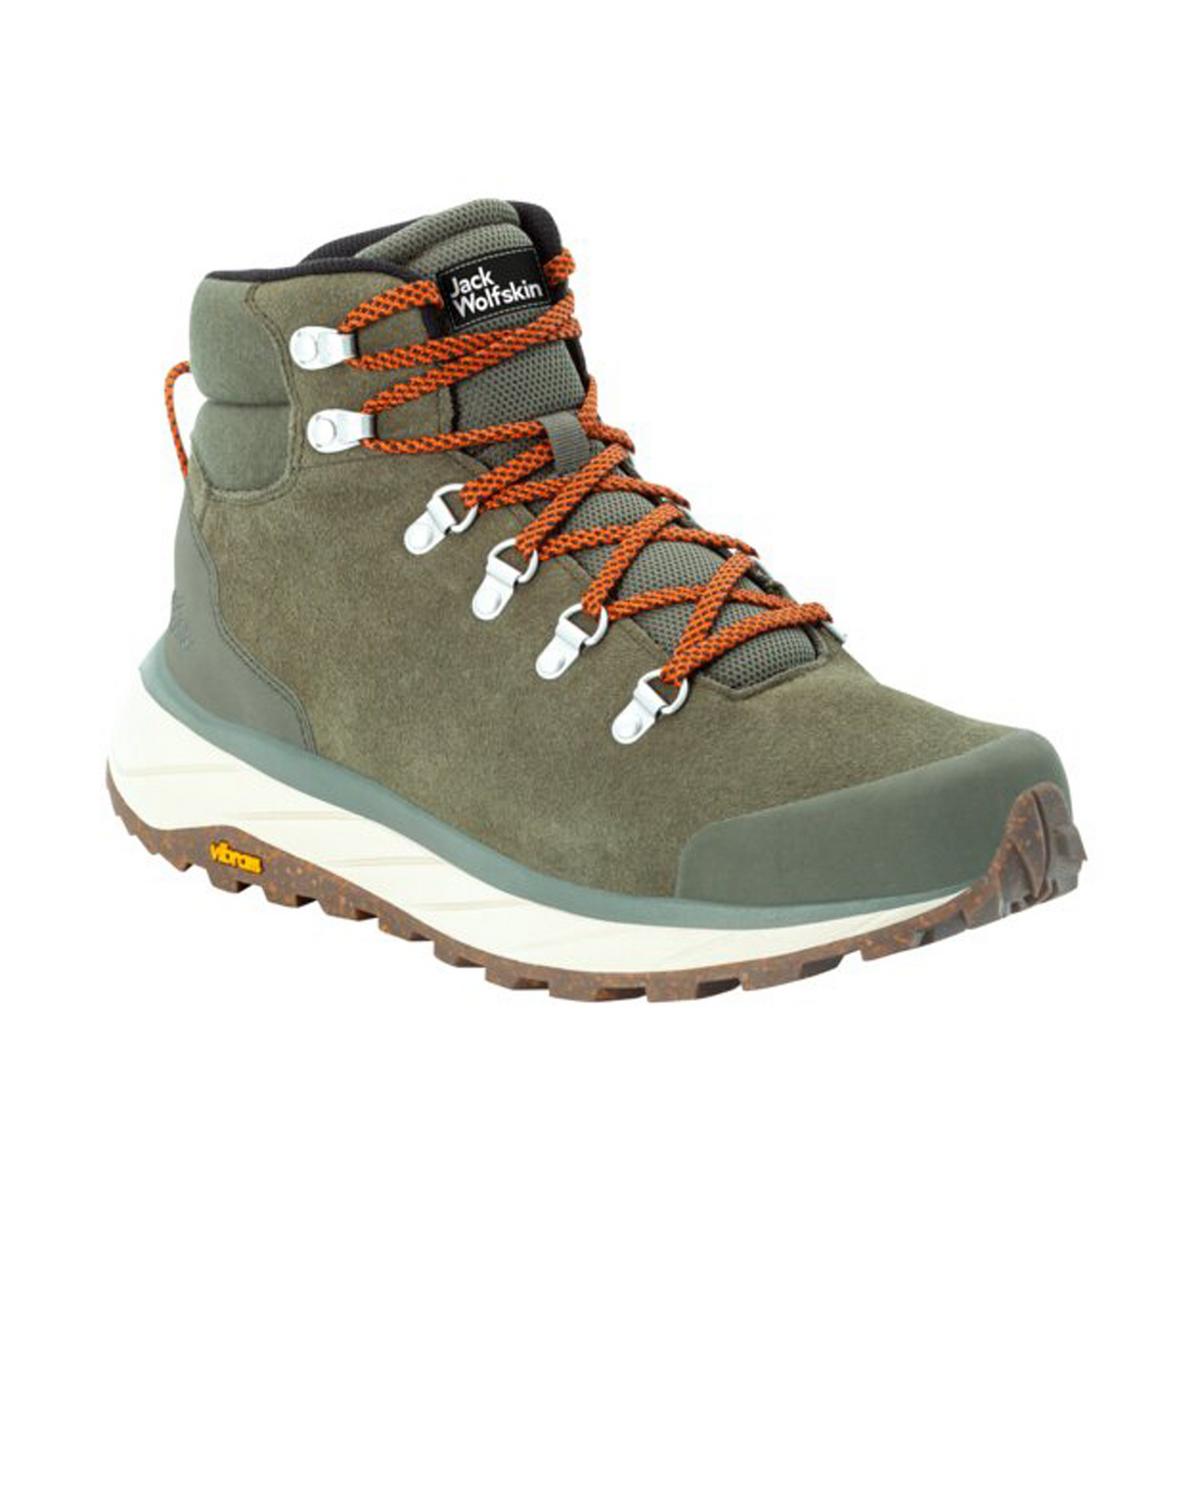 Jack Wolfskin Men's TerraVenture Urban Mid Hiking Boots  -  Khaki